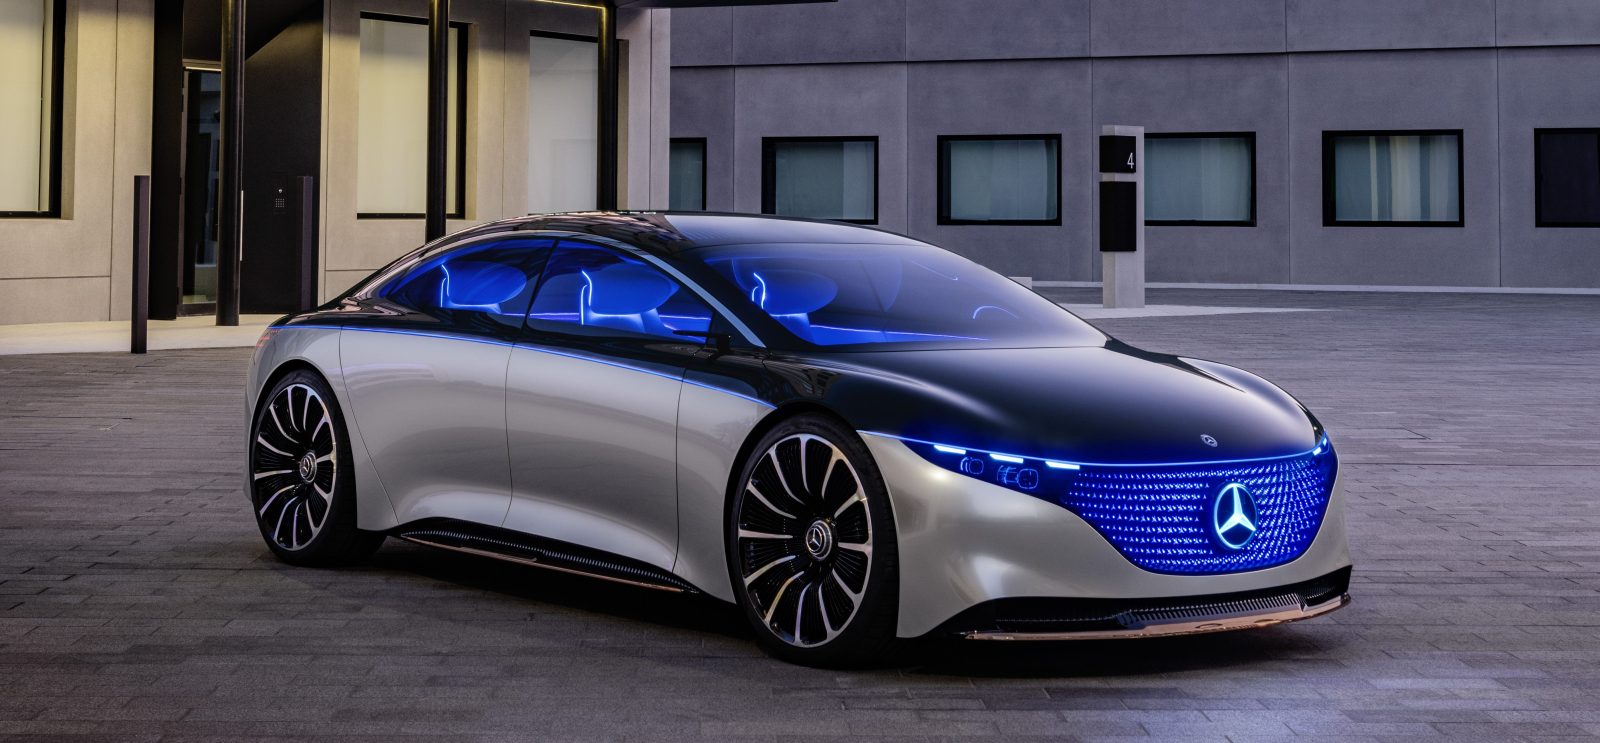 MercedesBenz unveils EQS electric sedan concept with 435 miles of